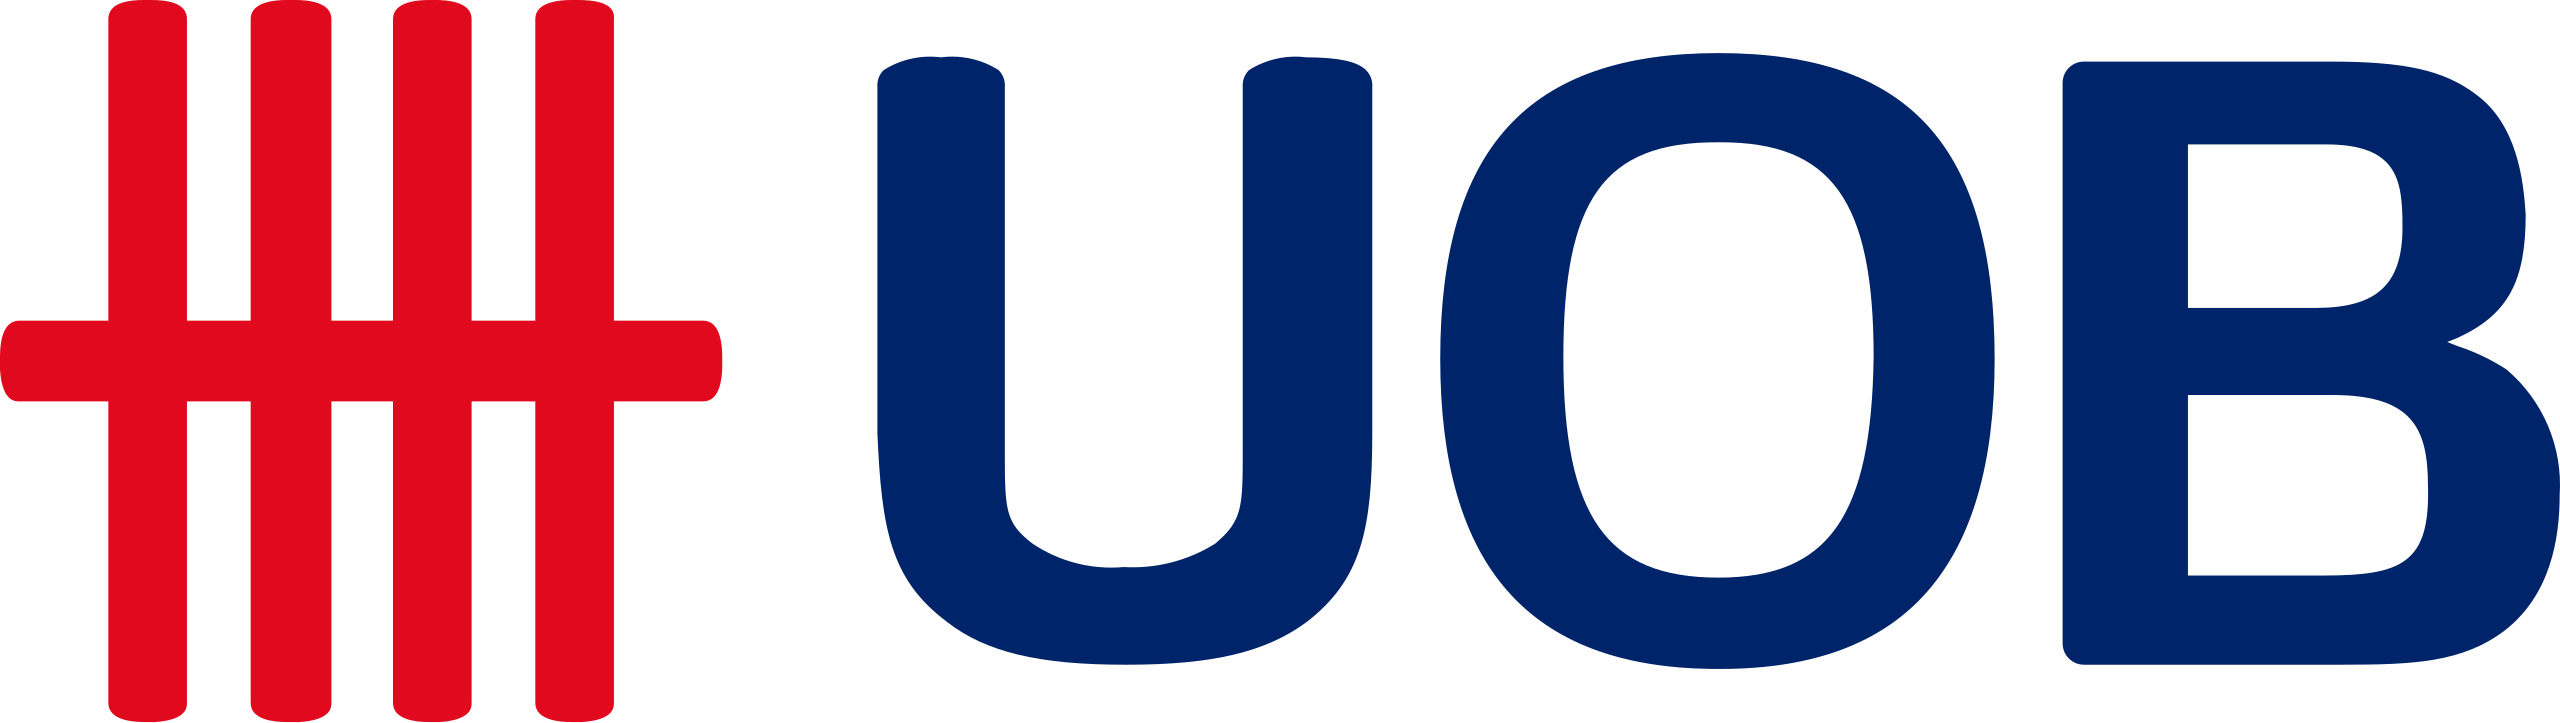 Logo UOB